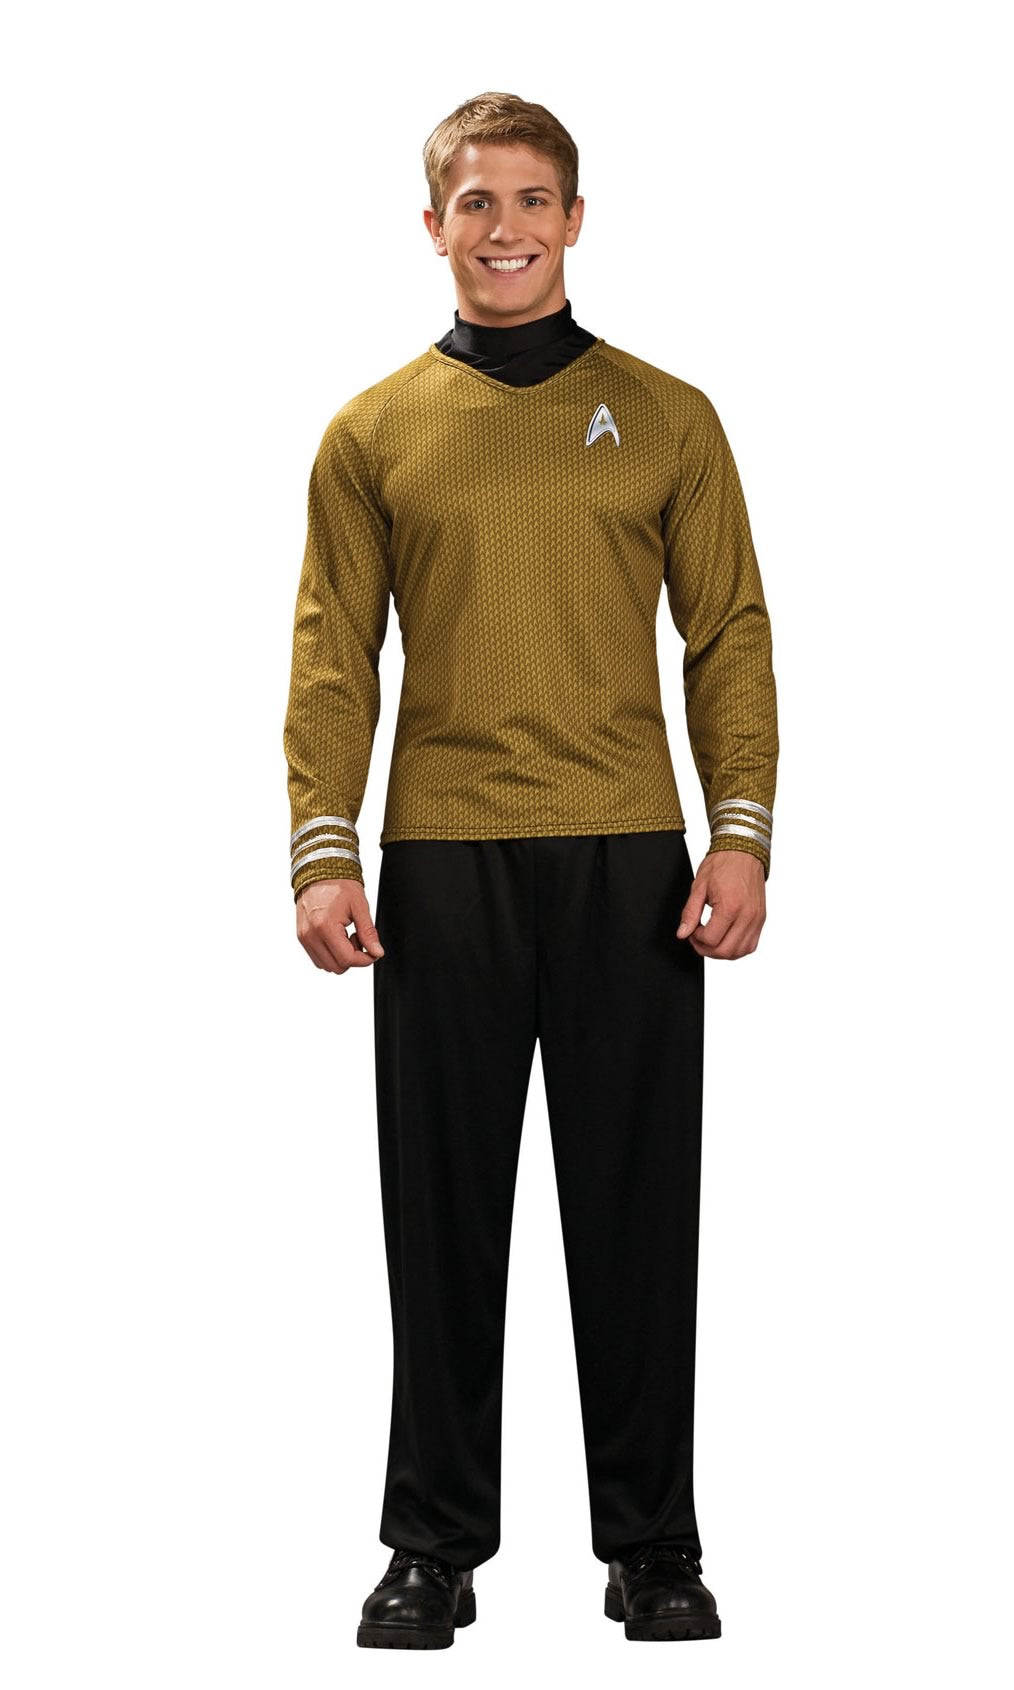 Star Trek Captain Kirk shirt